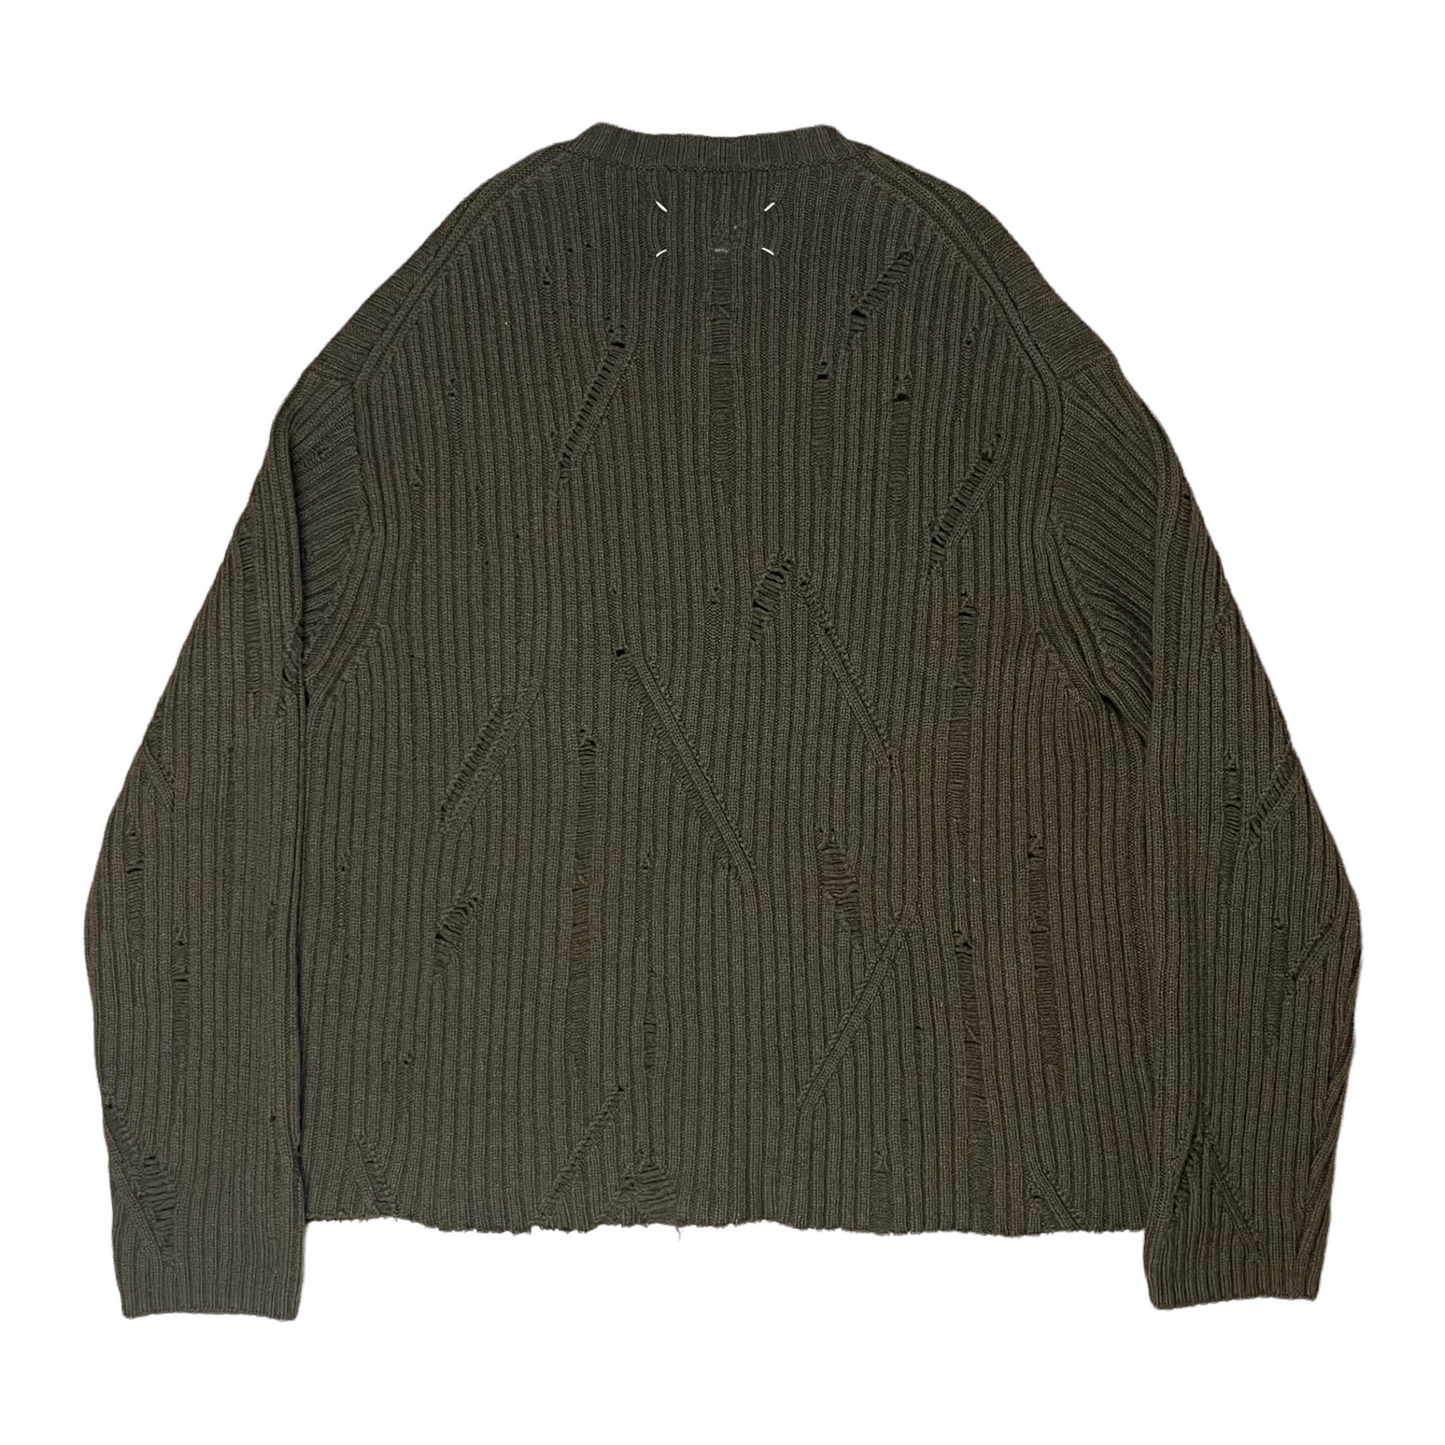 Maison Margiela Distressed Rib Knit Sweater - AW16